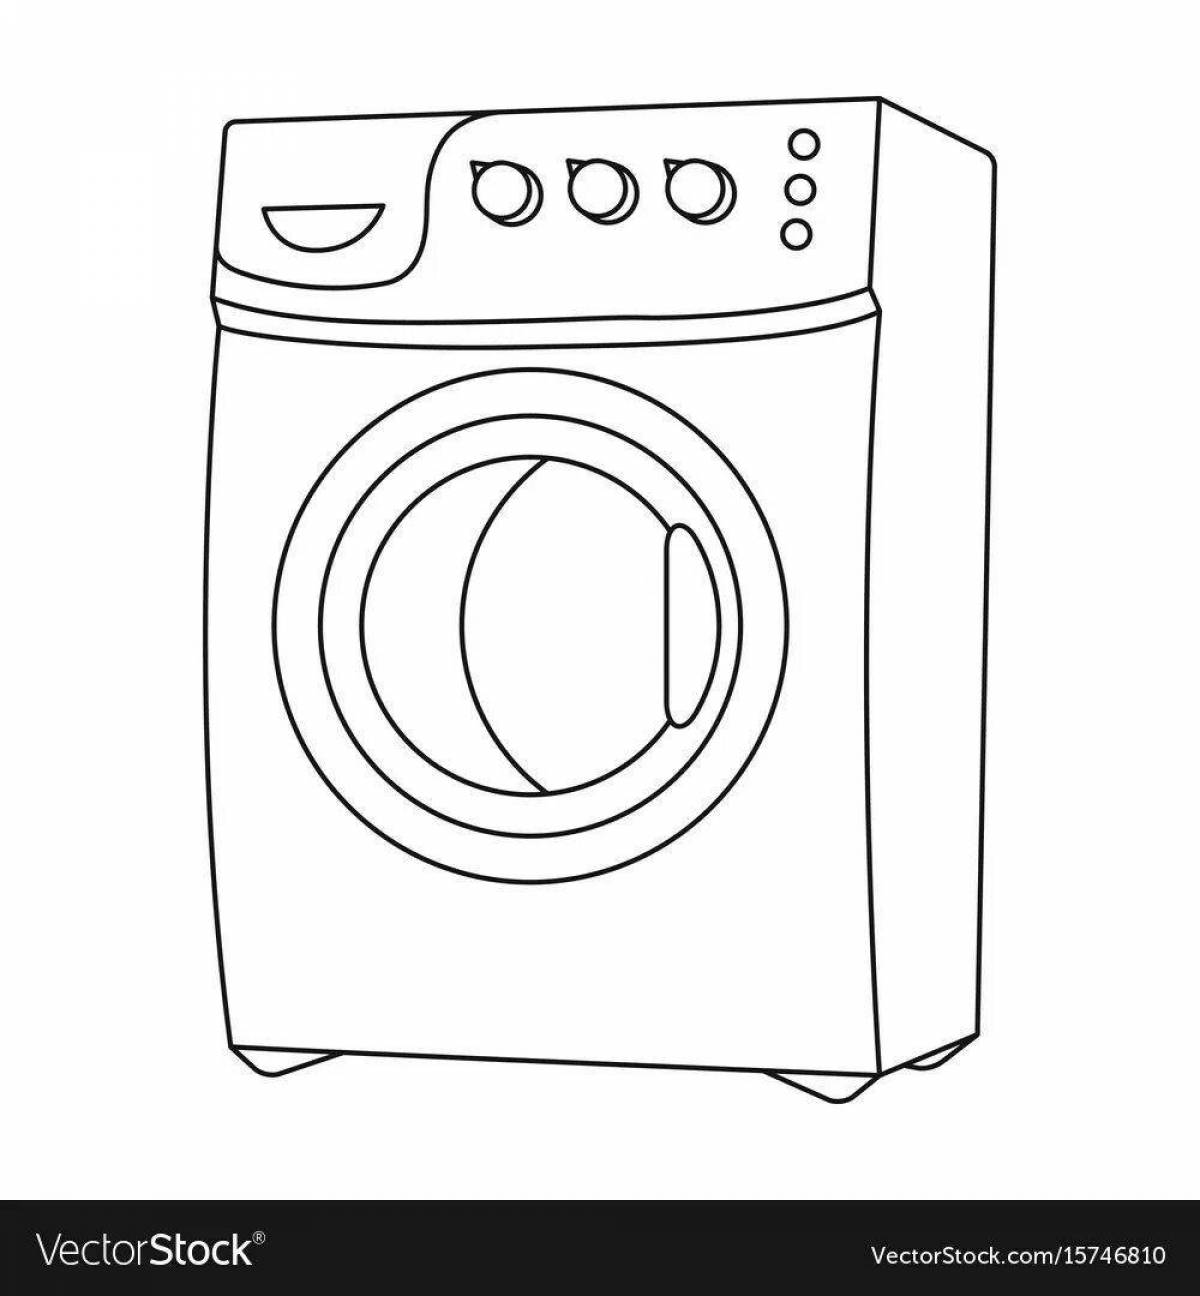 Gorgeous washing machine coloring page